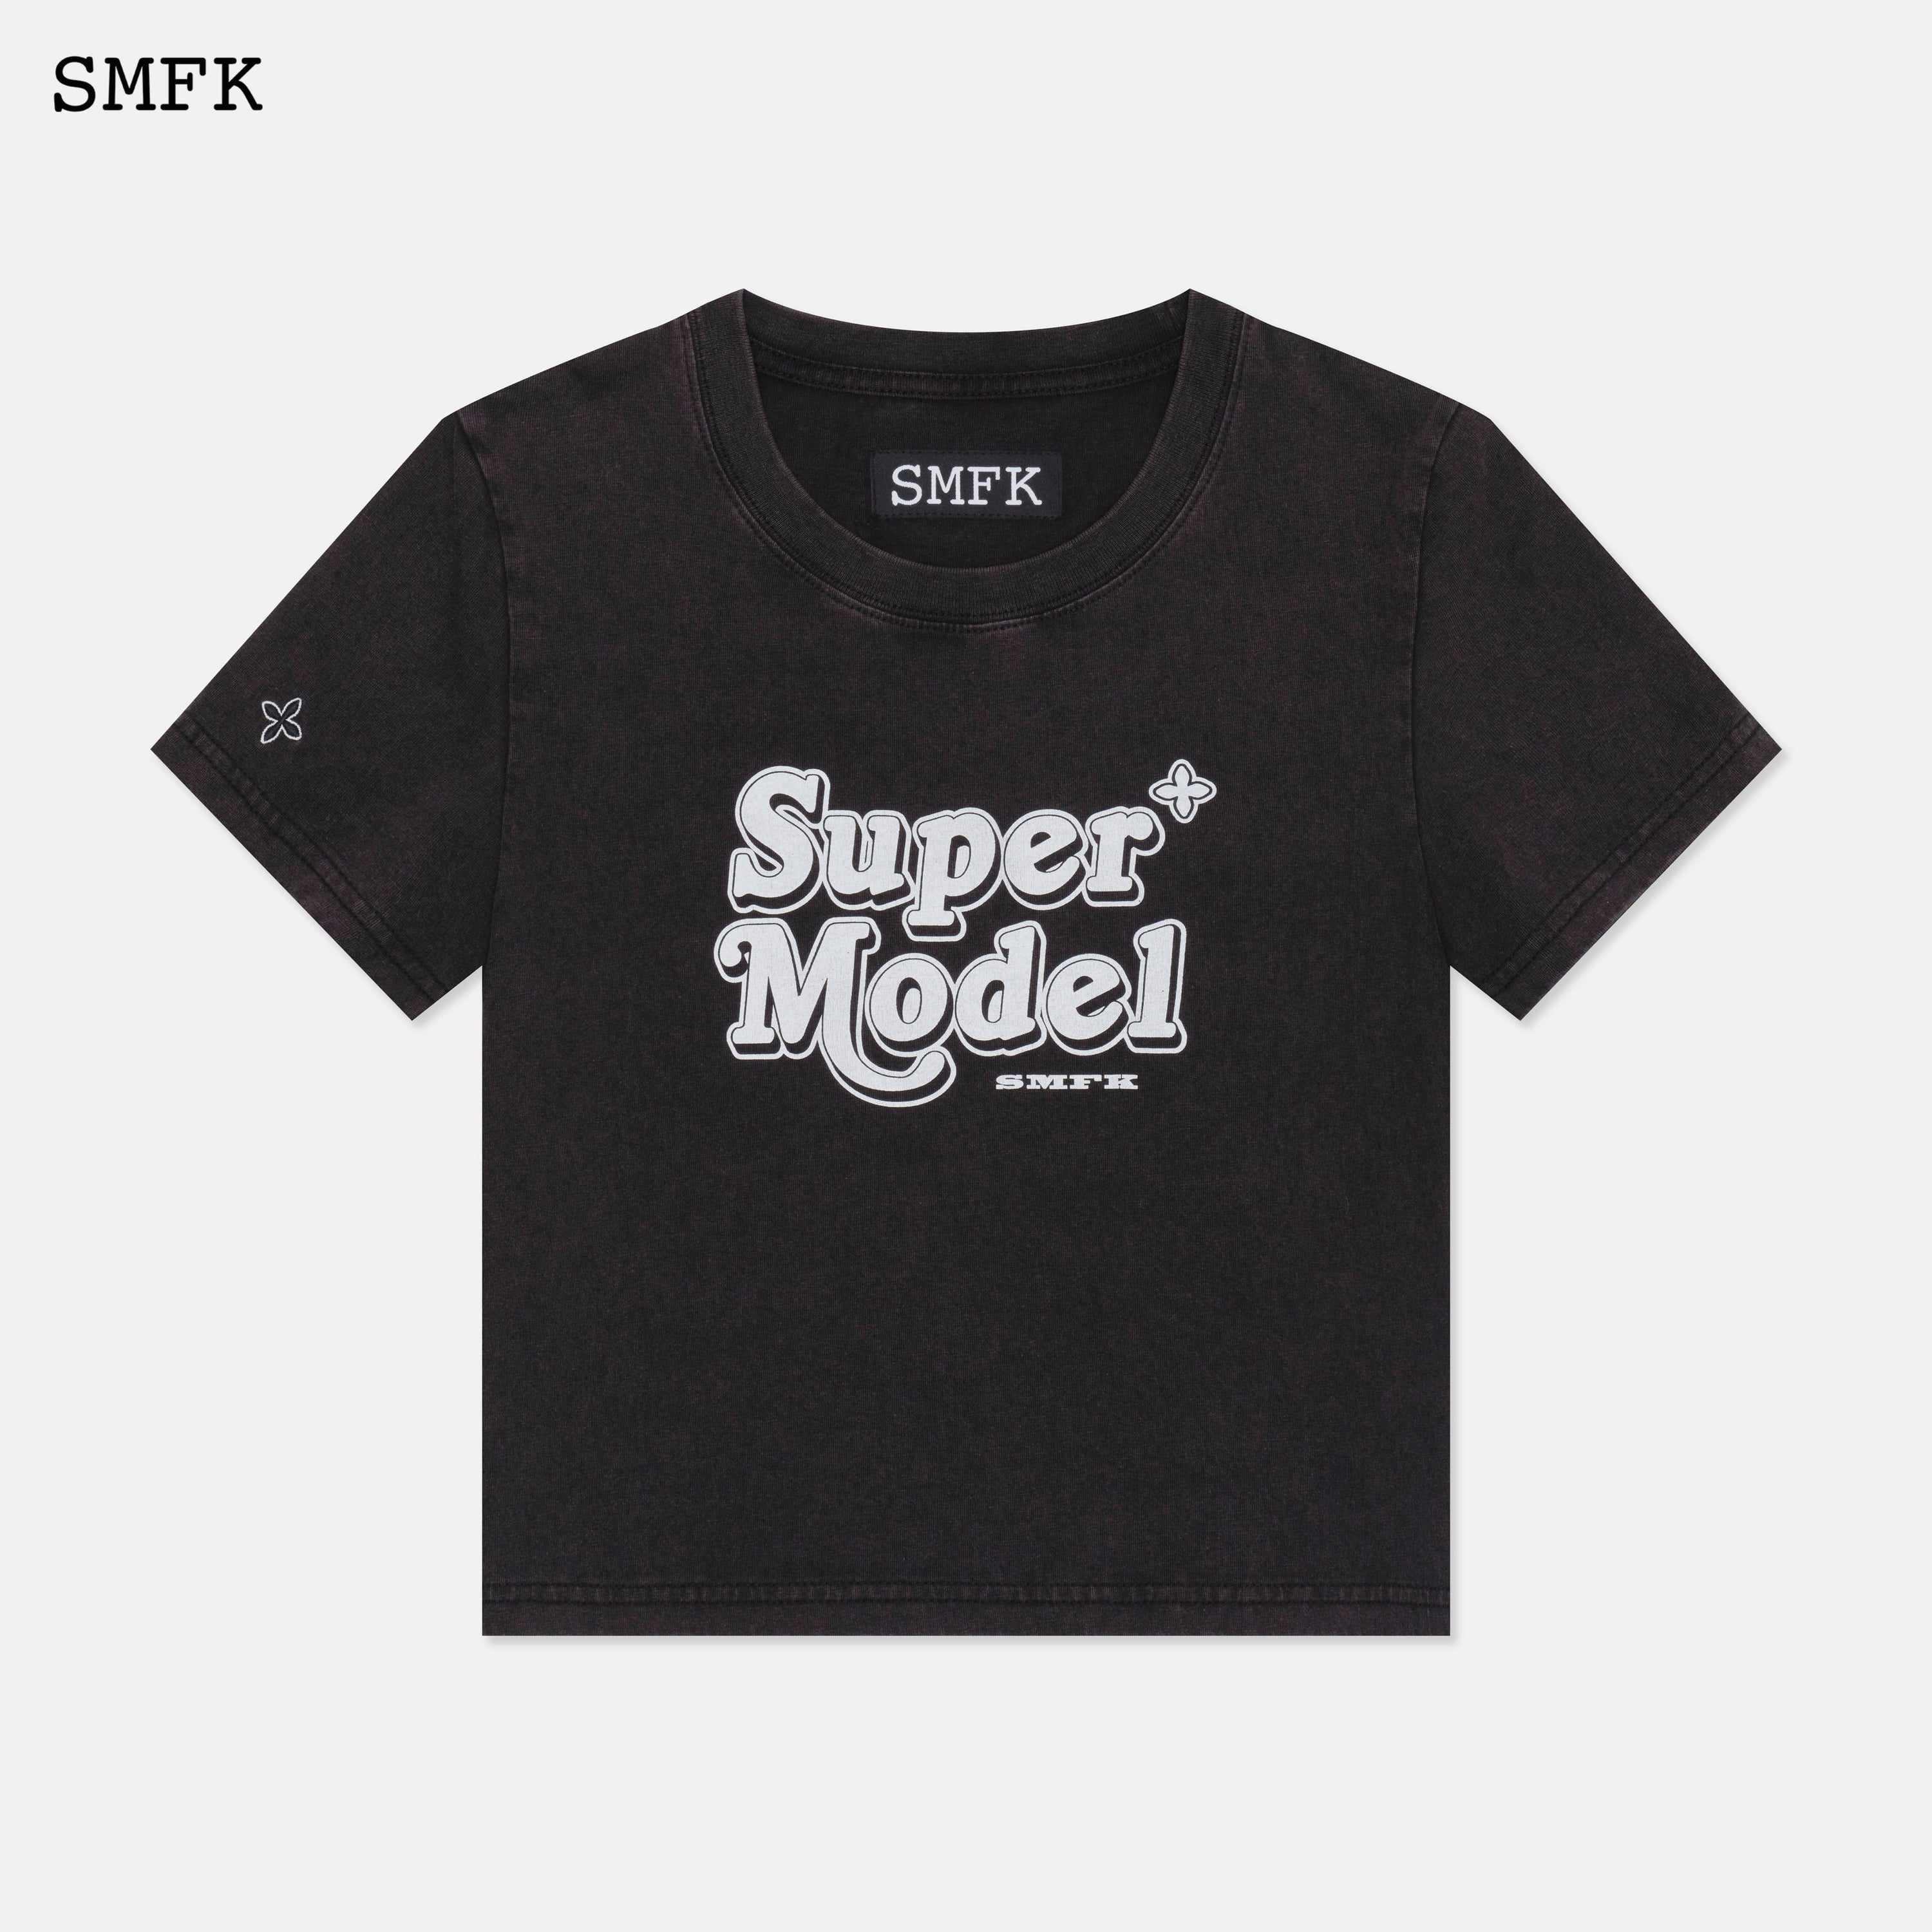 Skinny Model Grey Tight T-shirt - SMFK Official